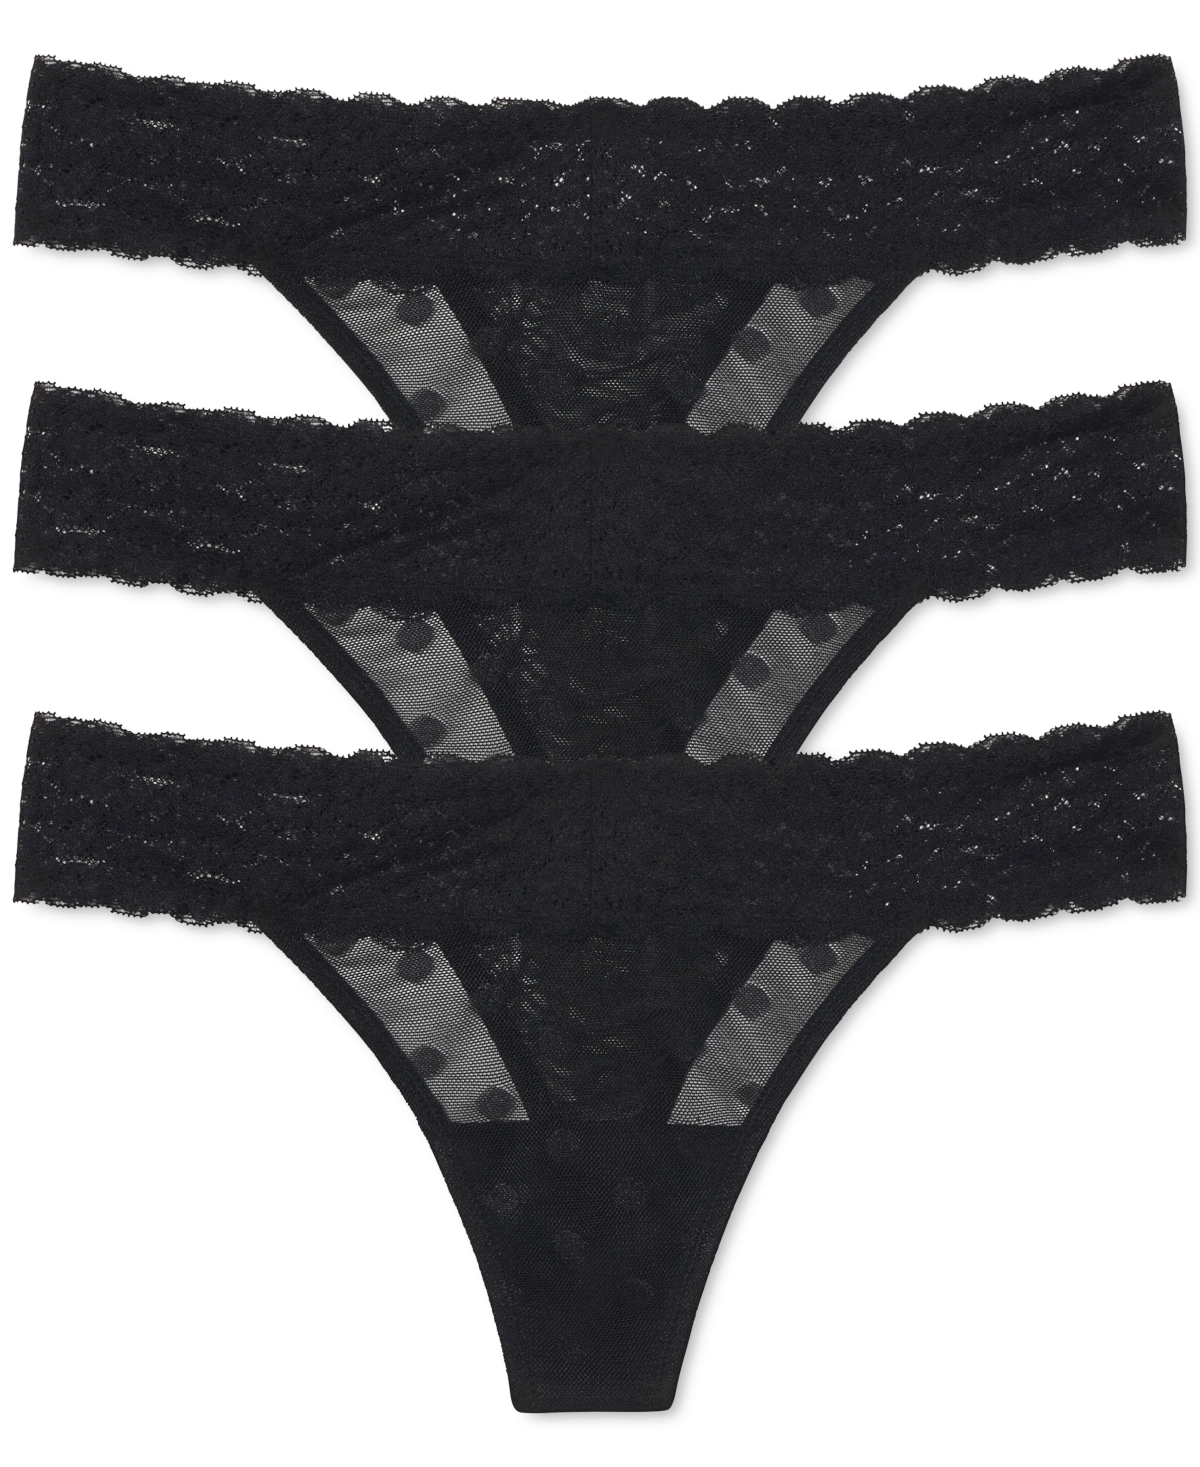 Women's Dare Dot Mesh Lace Panty 3 Pack - Black